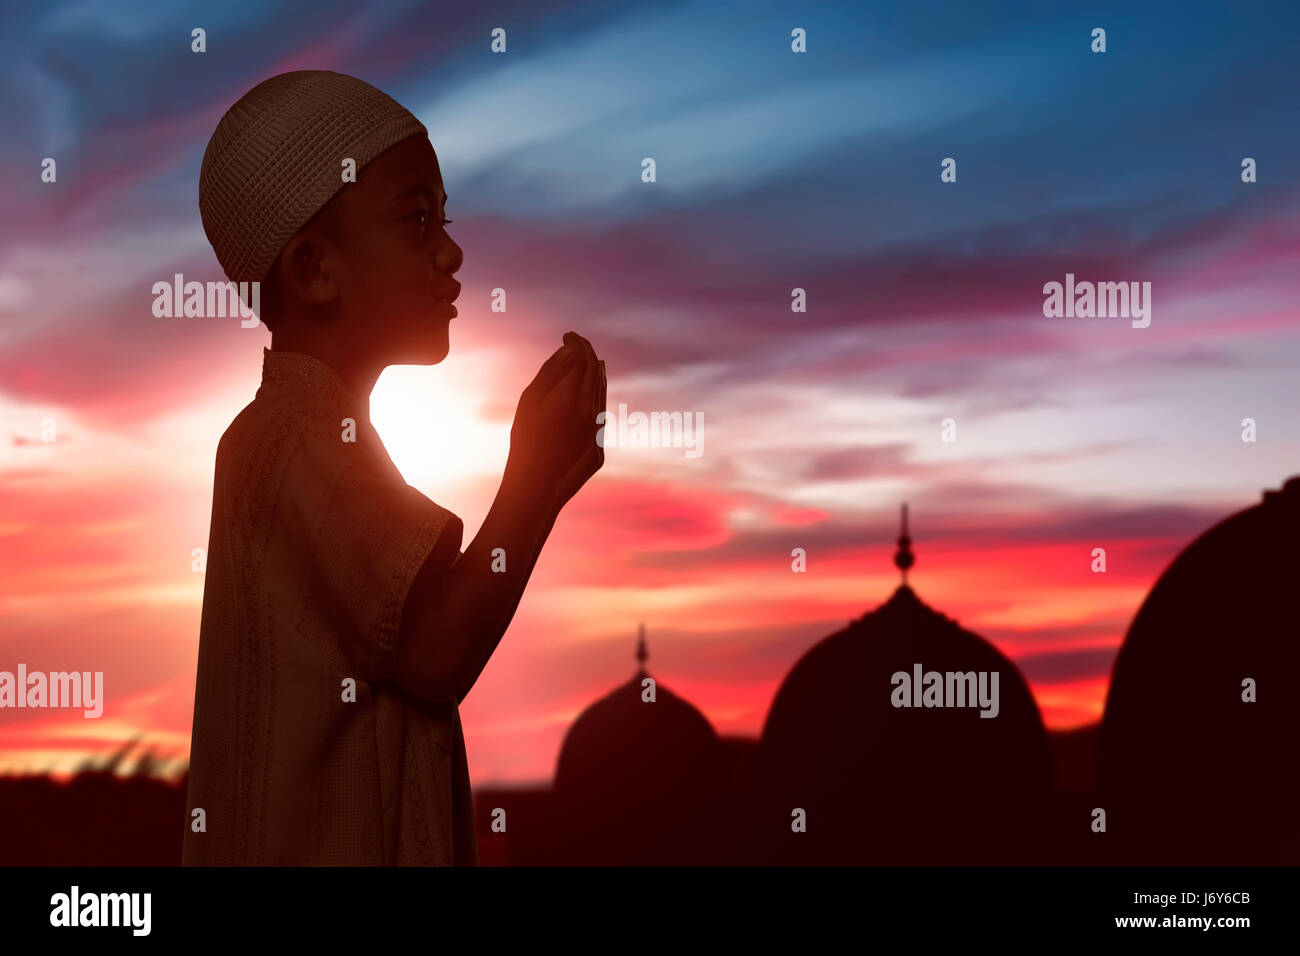 Portrait Of Asian Muslim Child Raising Hand And Praying Over